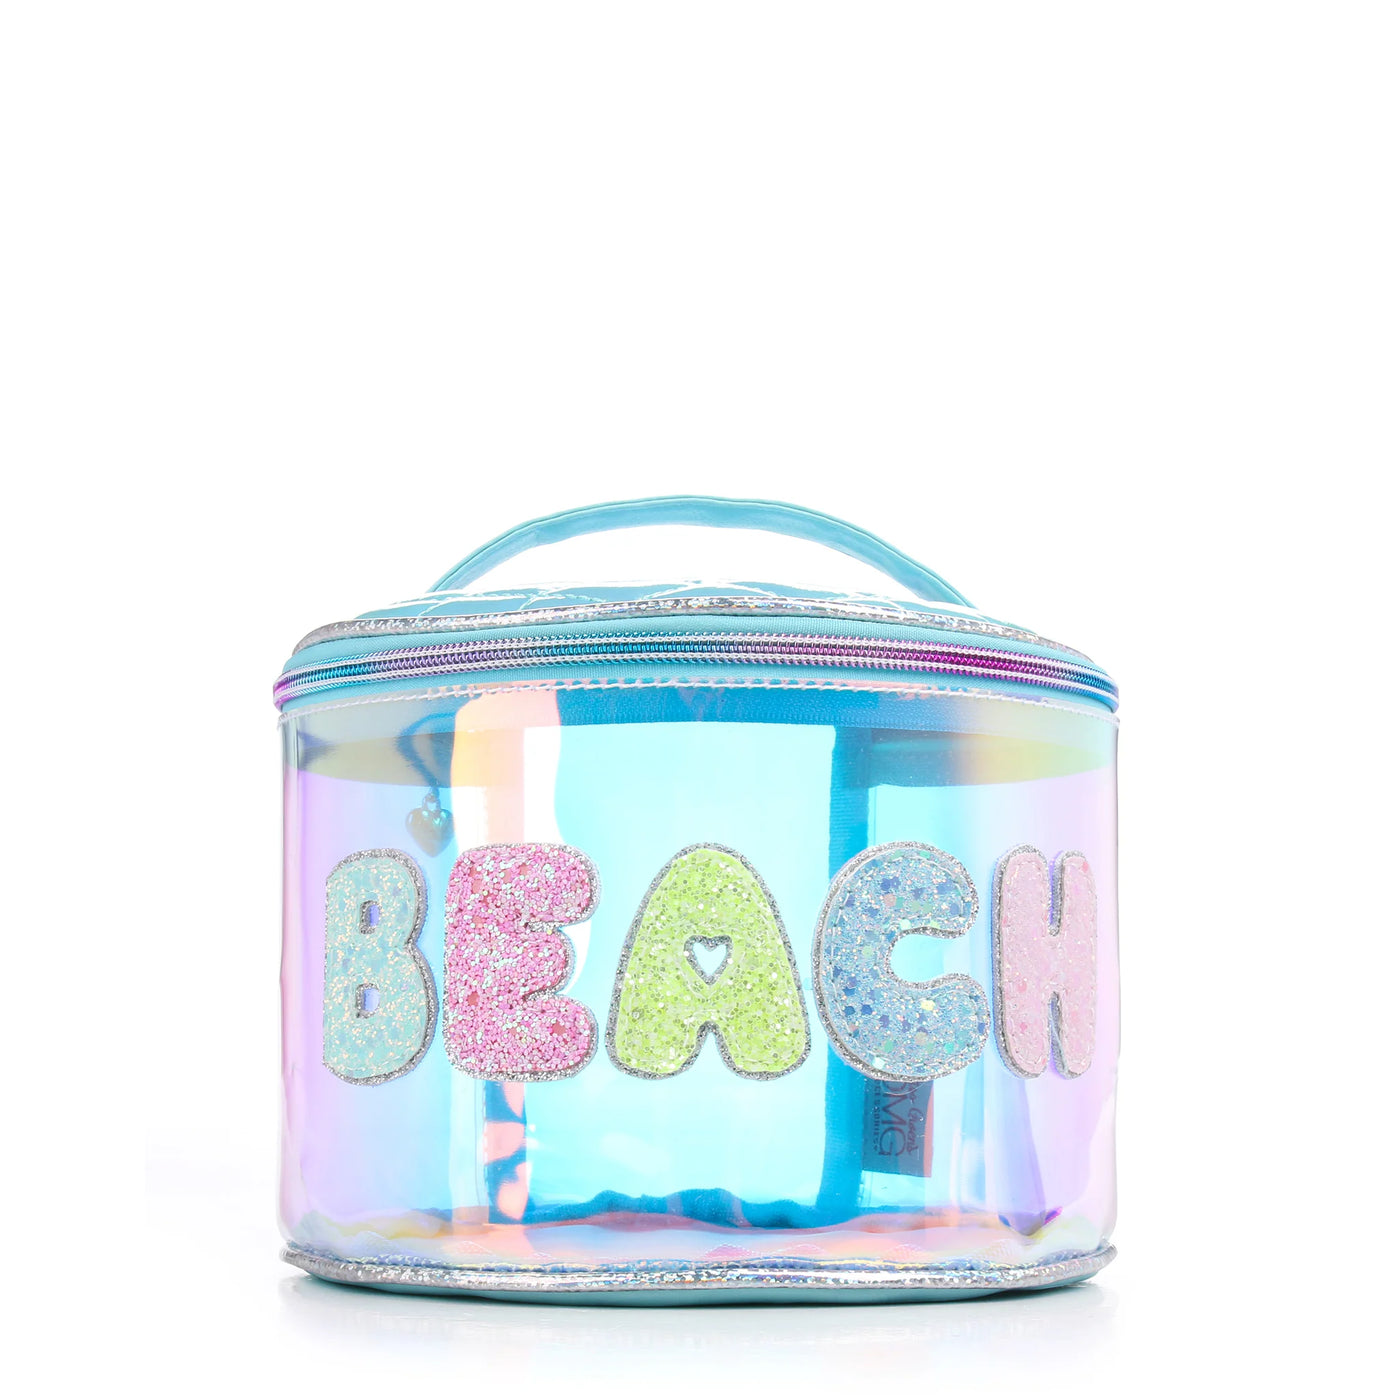 Round 'Beach' Glam Bag